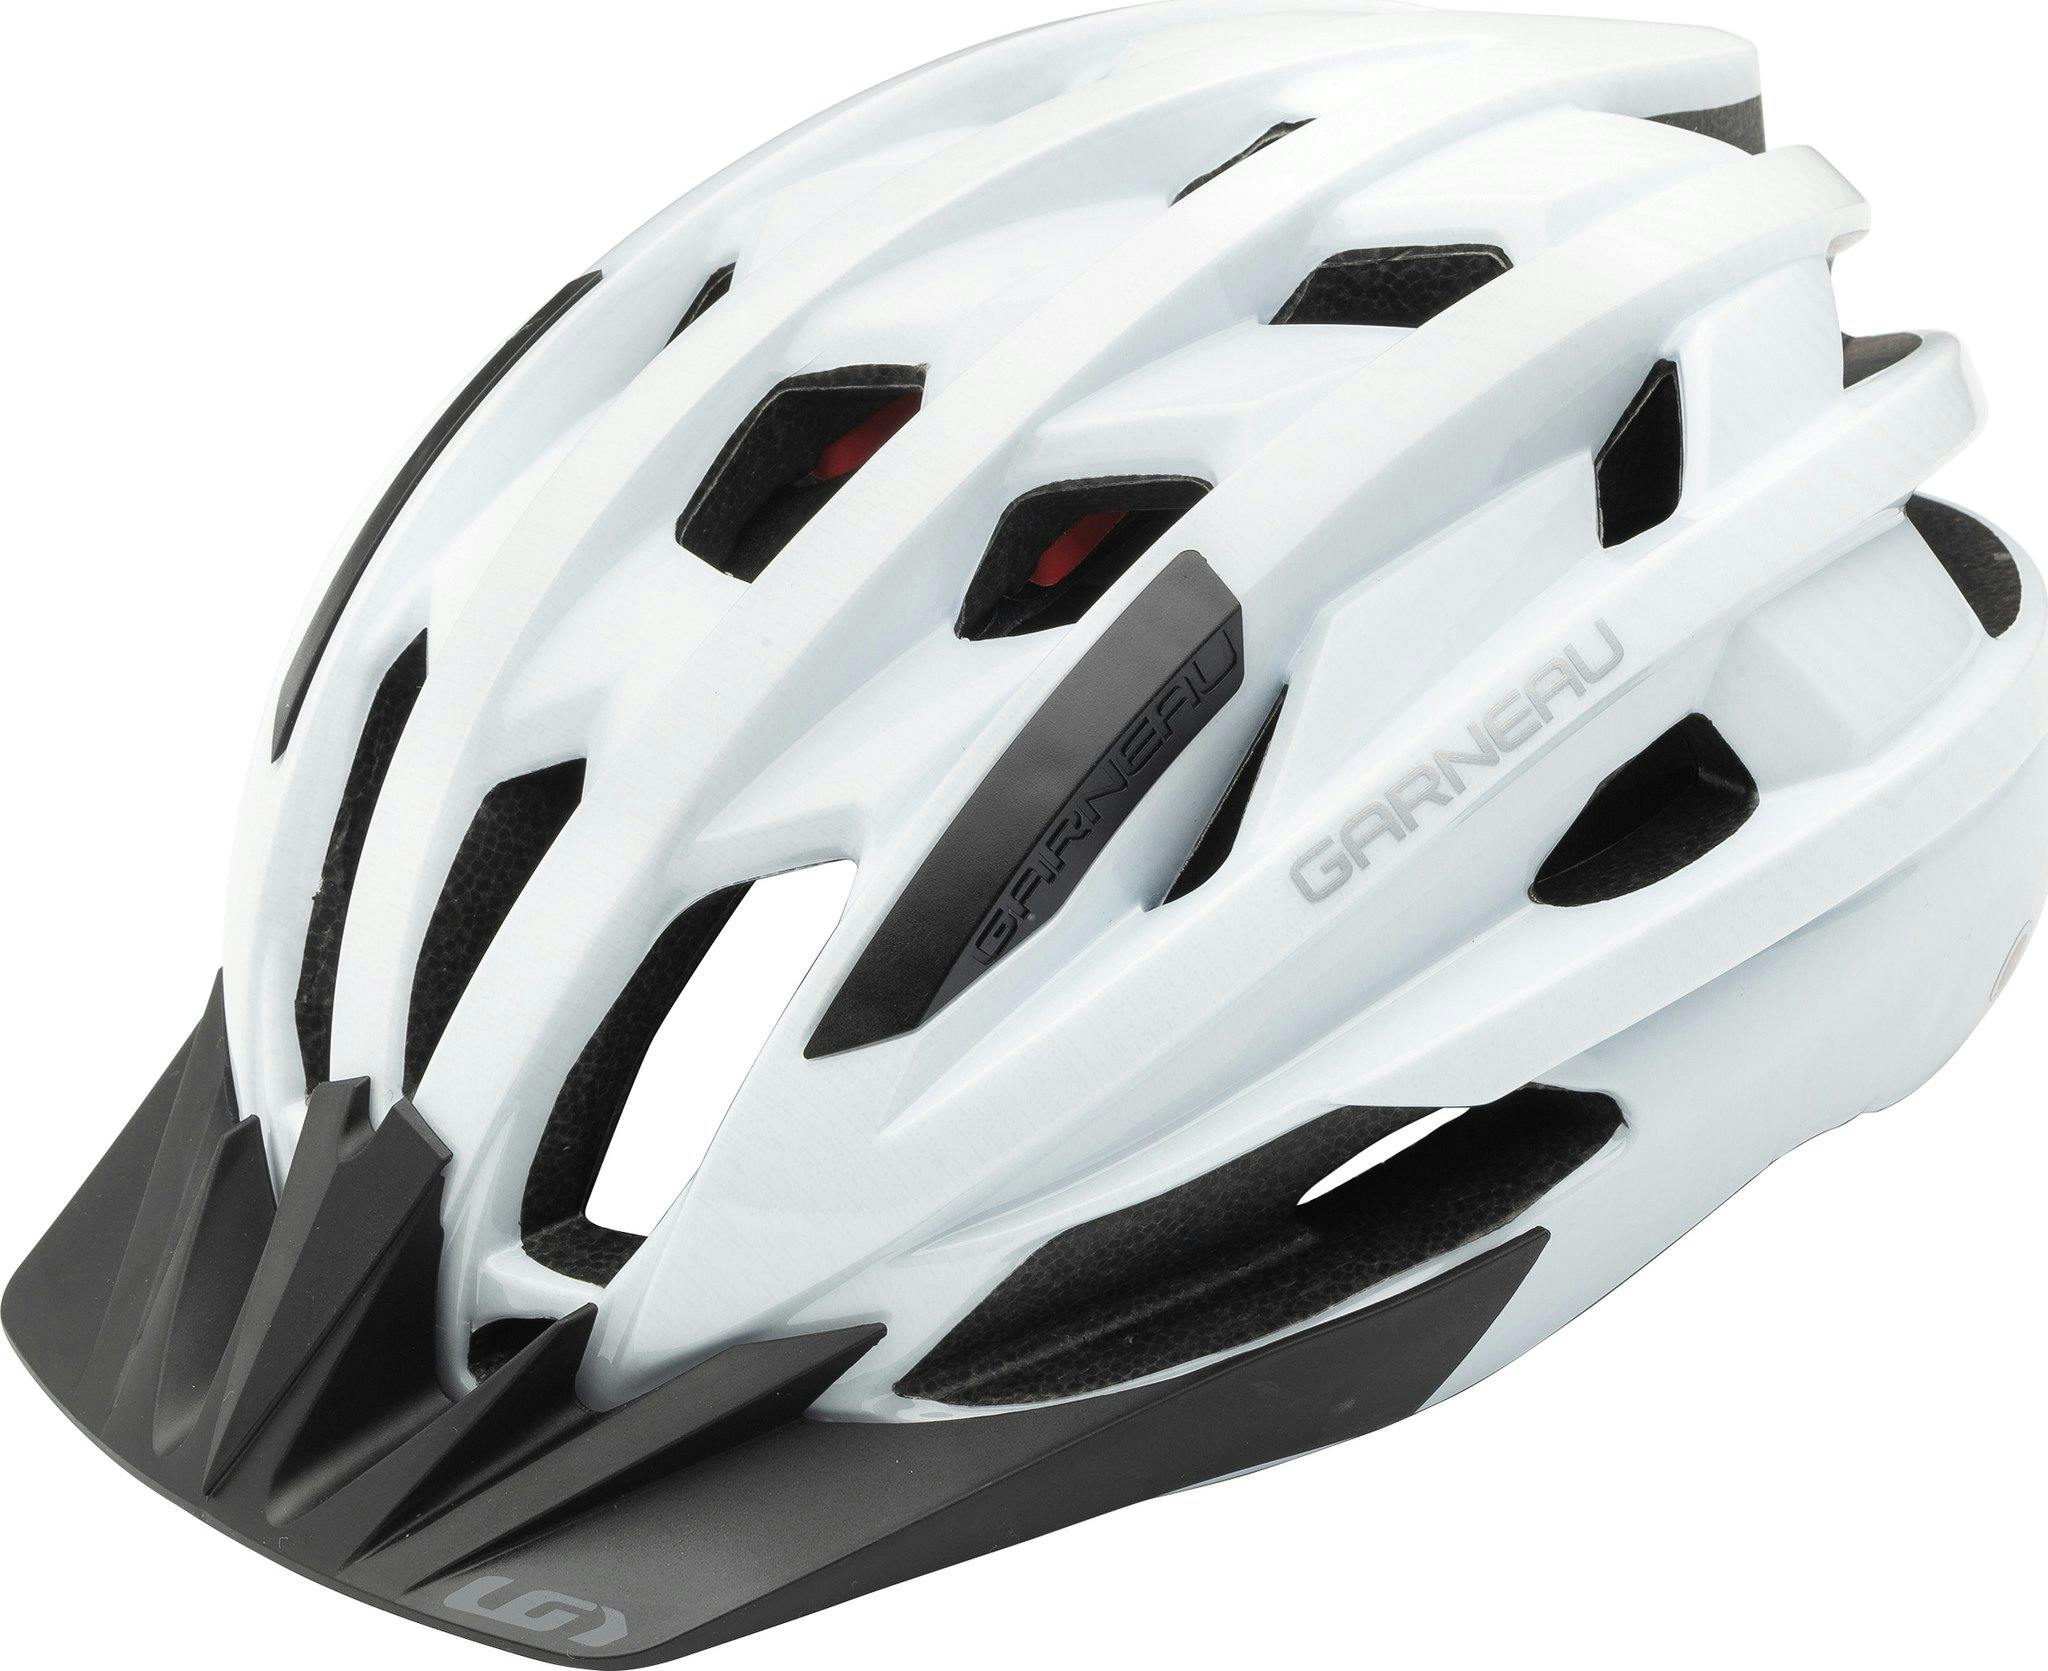 Product image for Tiffany II Helmet - Women's